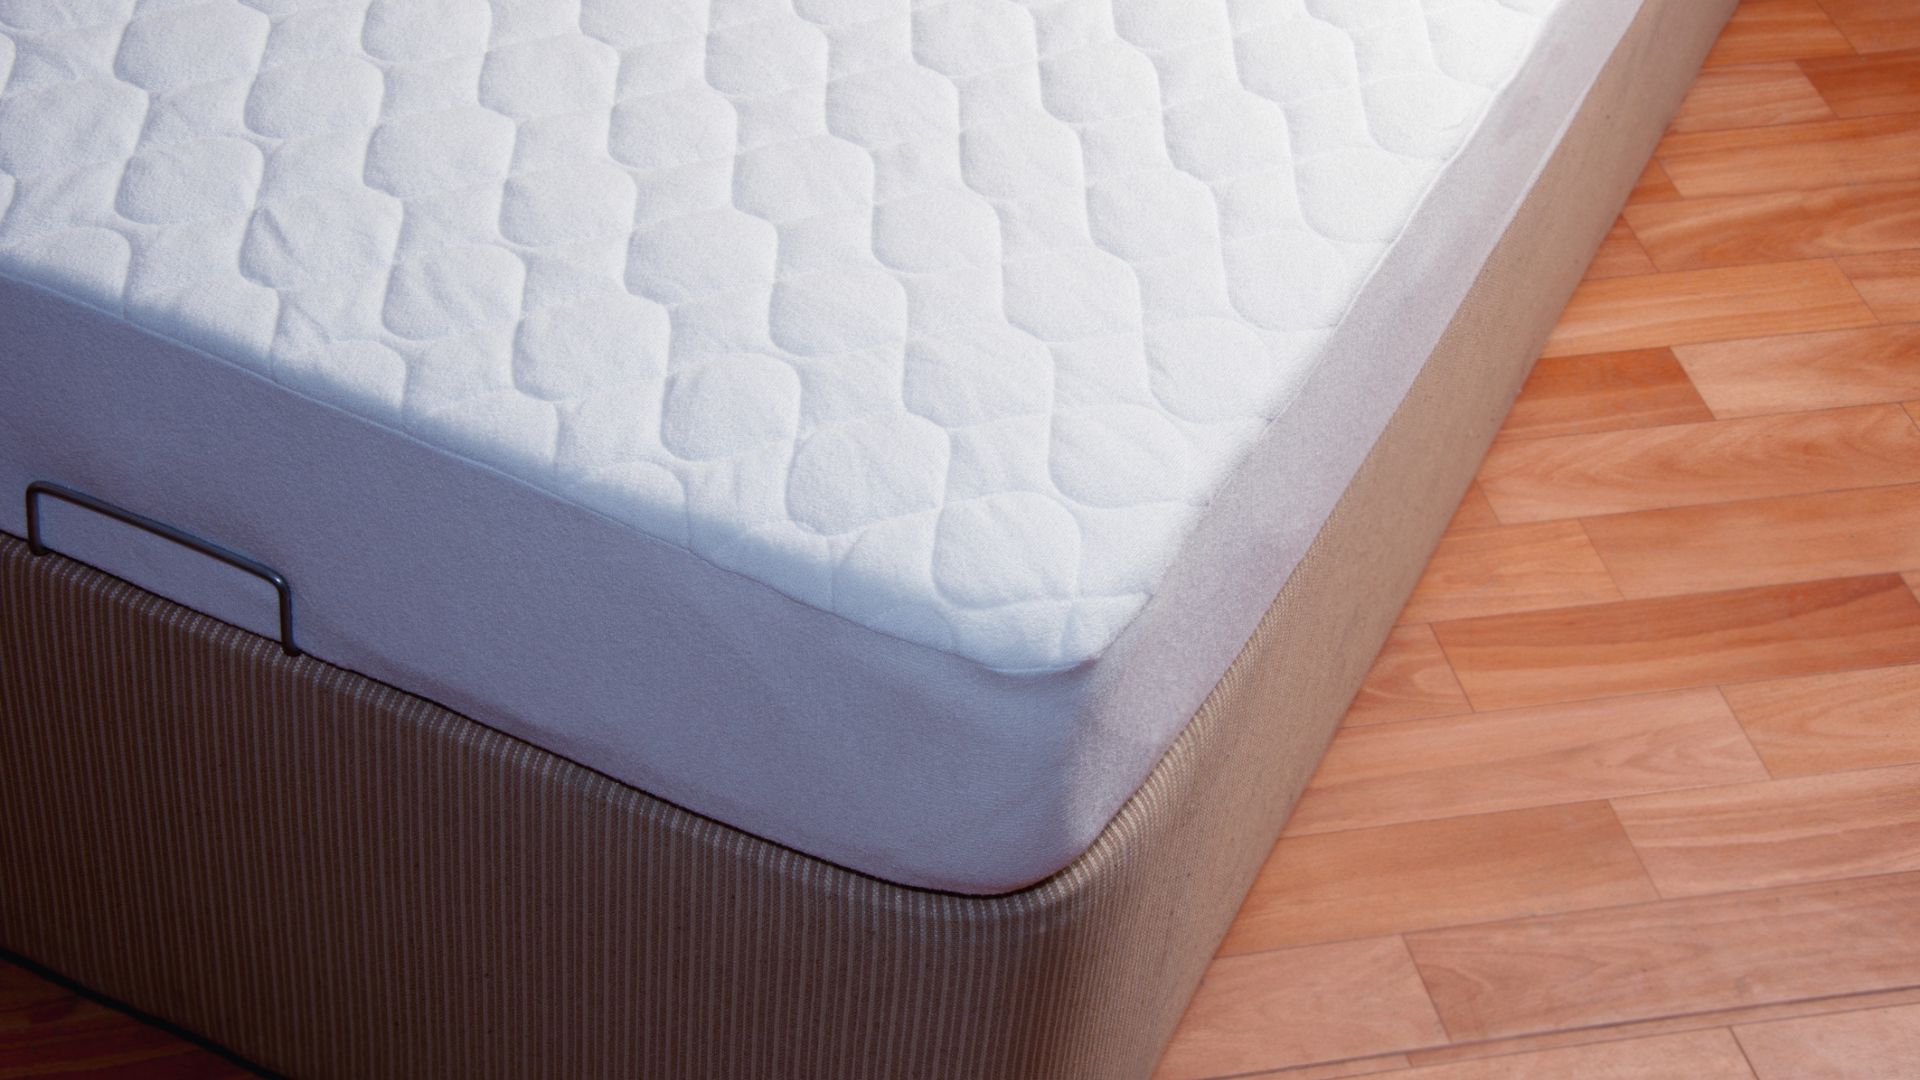 A close up image of a corner of a mattress